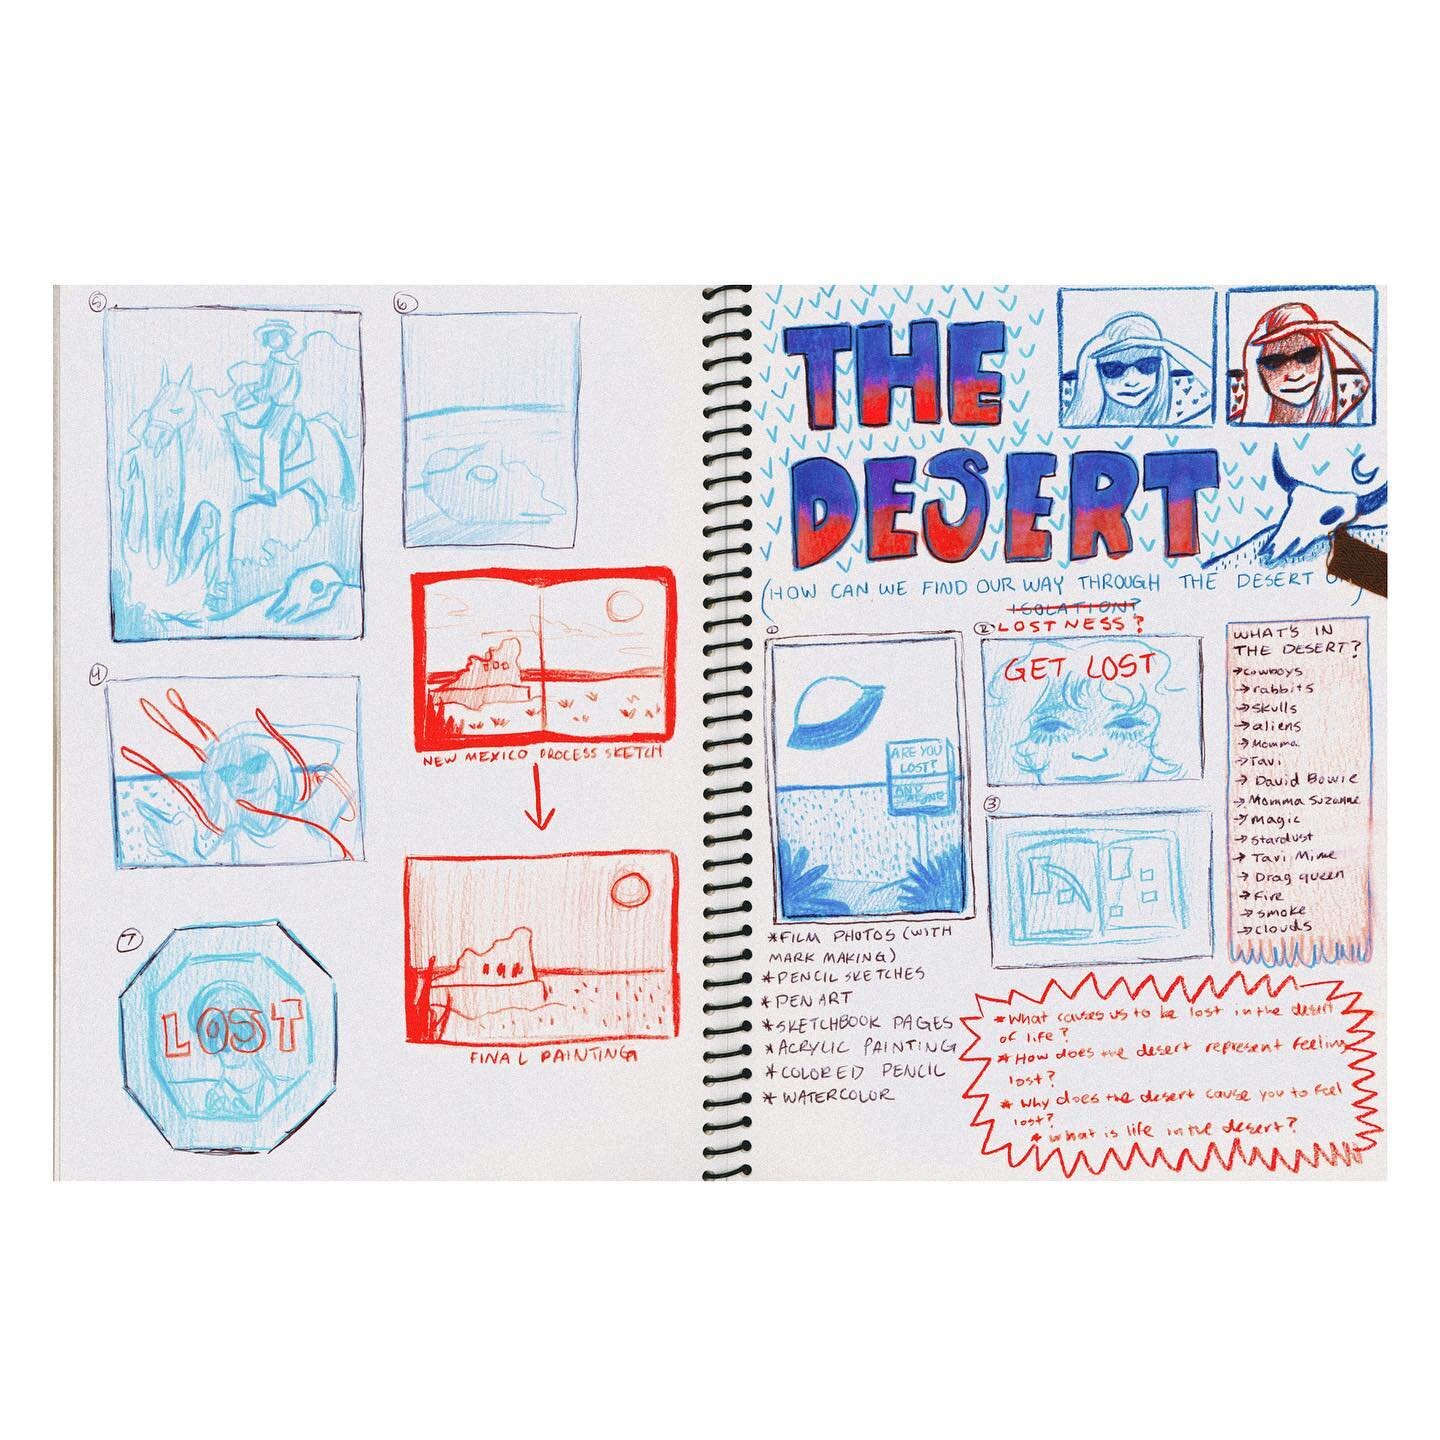 &ldquo;The desert&rdquo; concept art page for ap studio! 🌵🏜🛸
.
.
.

#sketchbook #sketch #art #drawing #artist #illustration #artwork #draw #sketching #artistsoninstagram #instaart #artoftheday #painting #drawings #pencildrawing #pencil #digitalart